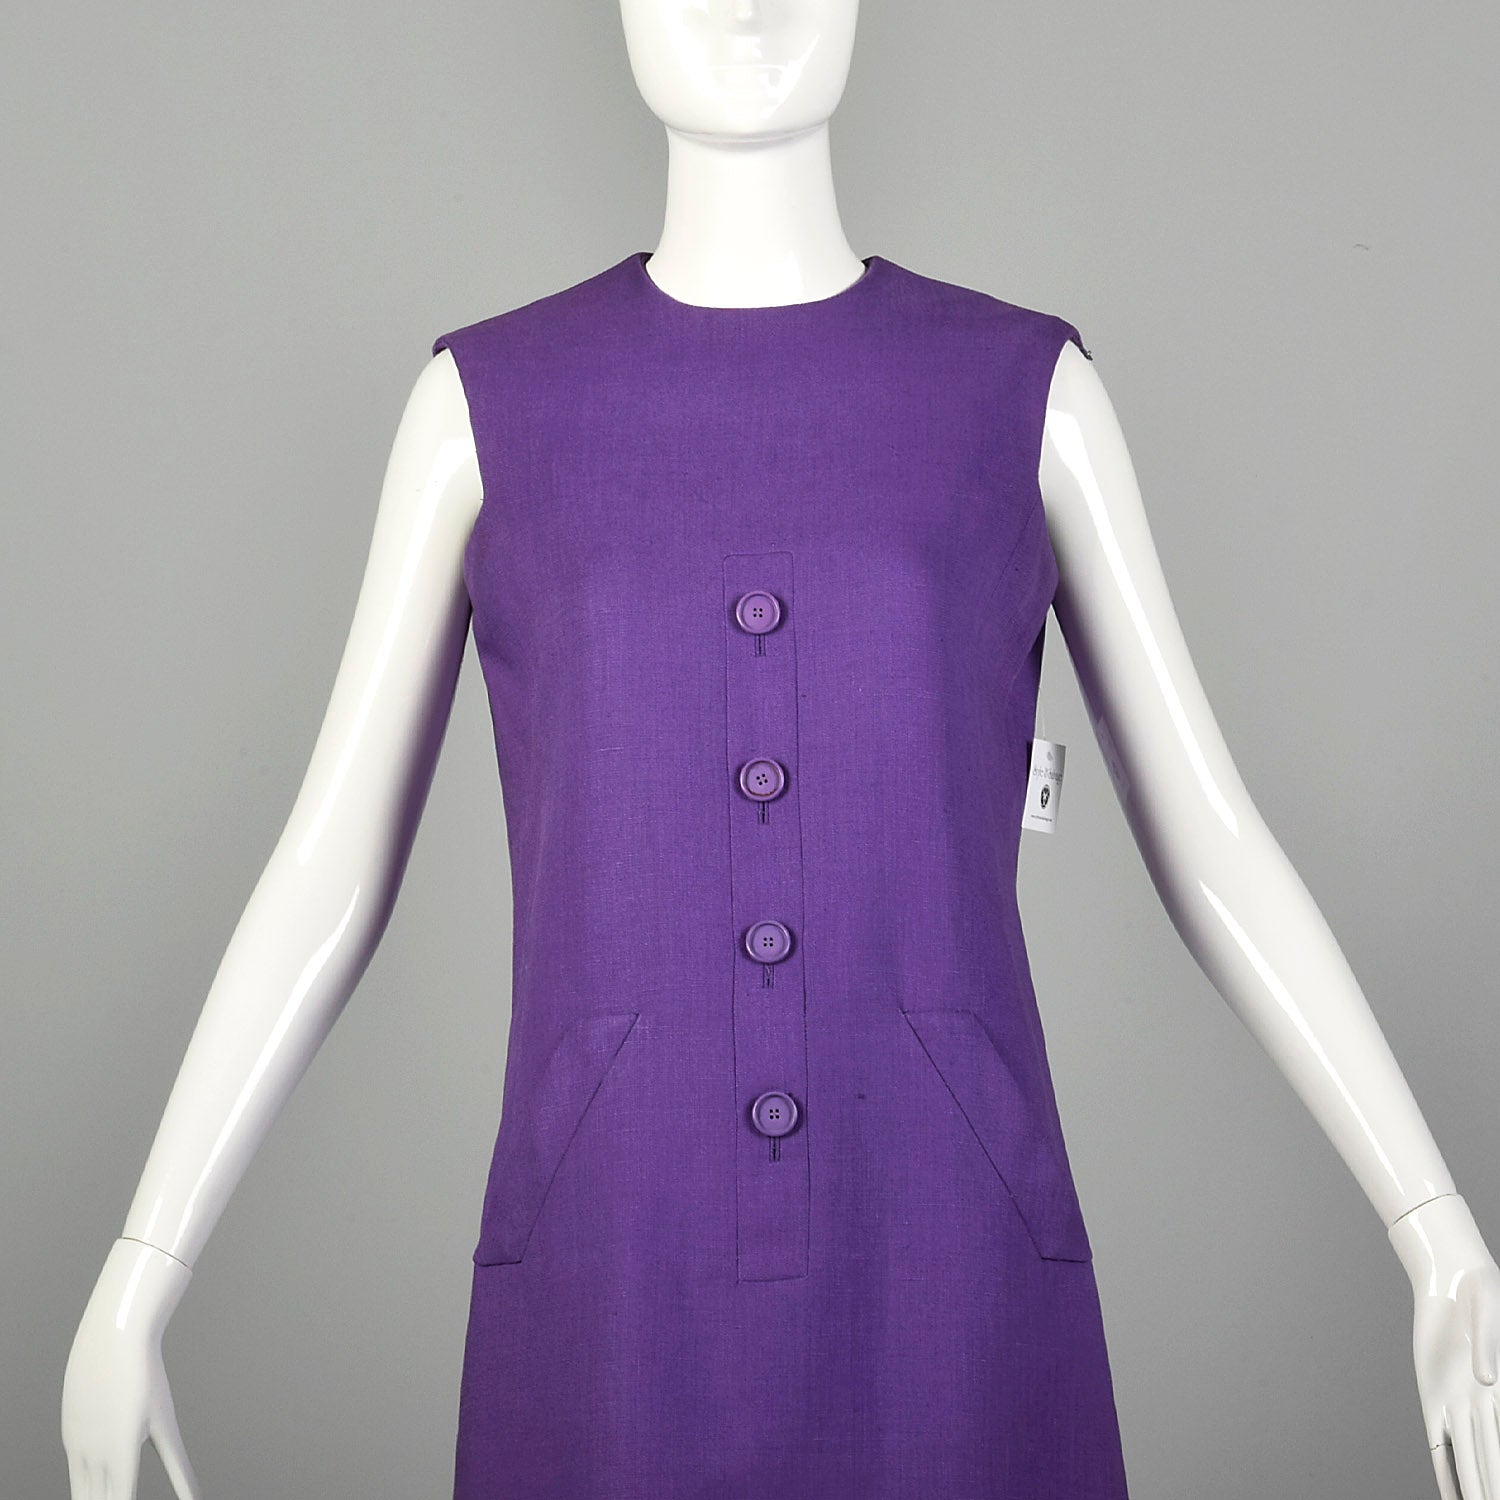 Small 1960s Dress Geoffrey Beene Purple Mini Linen Shift Sleeveless Space Age Mod Designer Dress